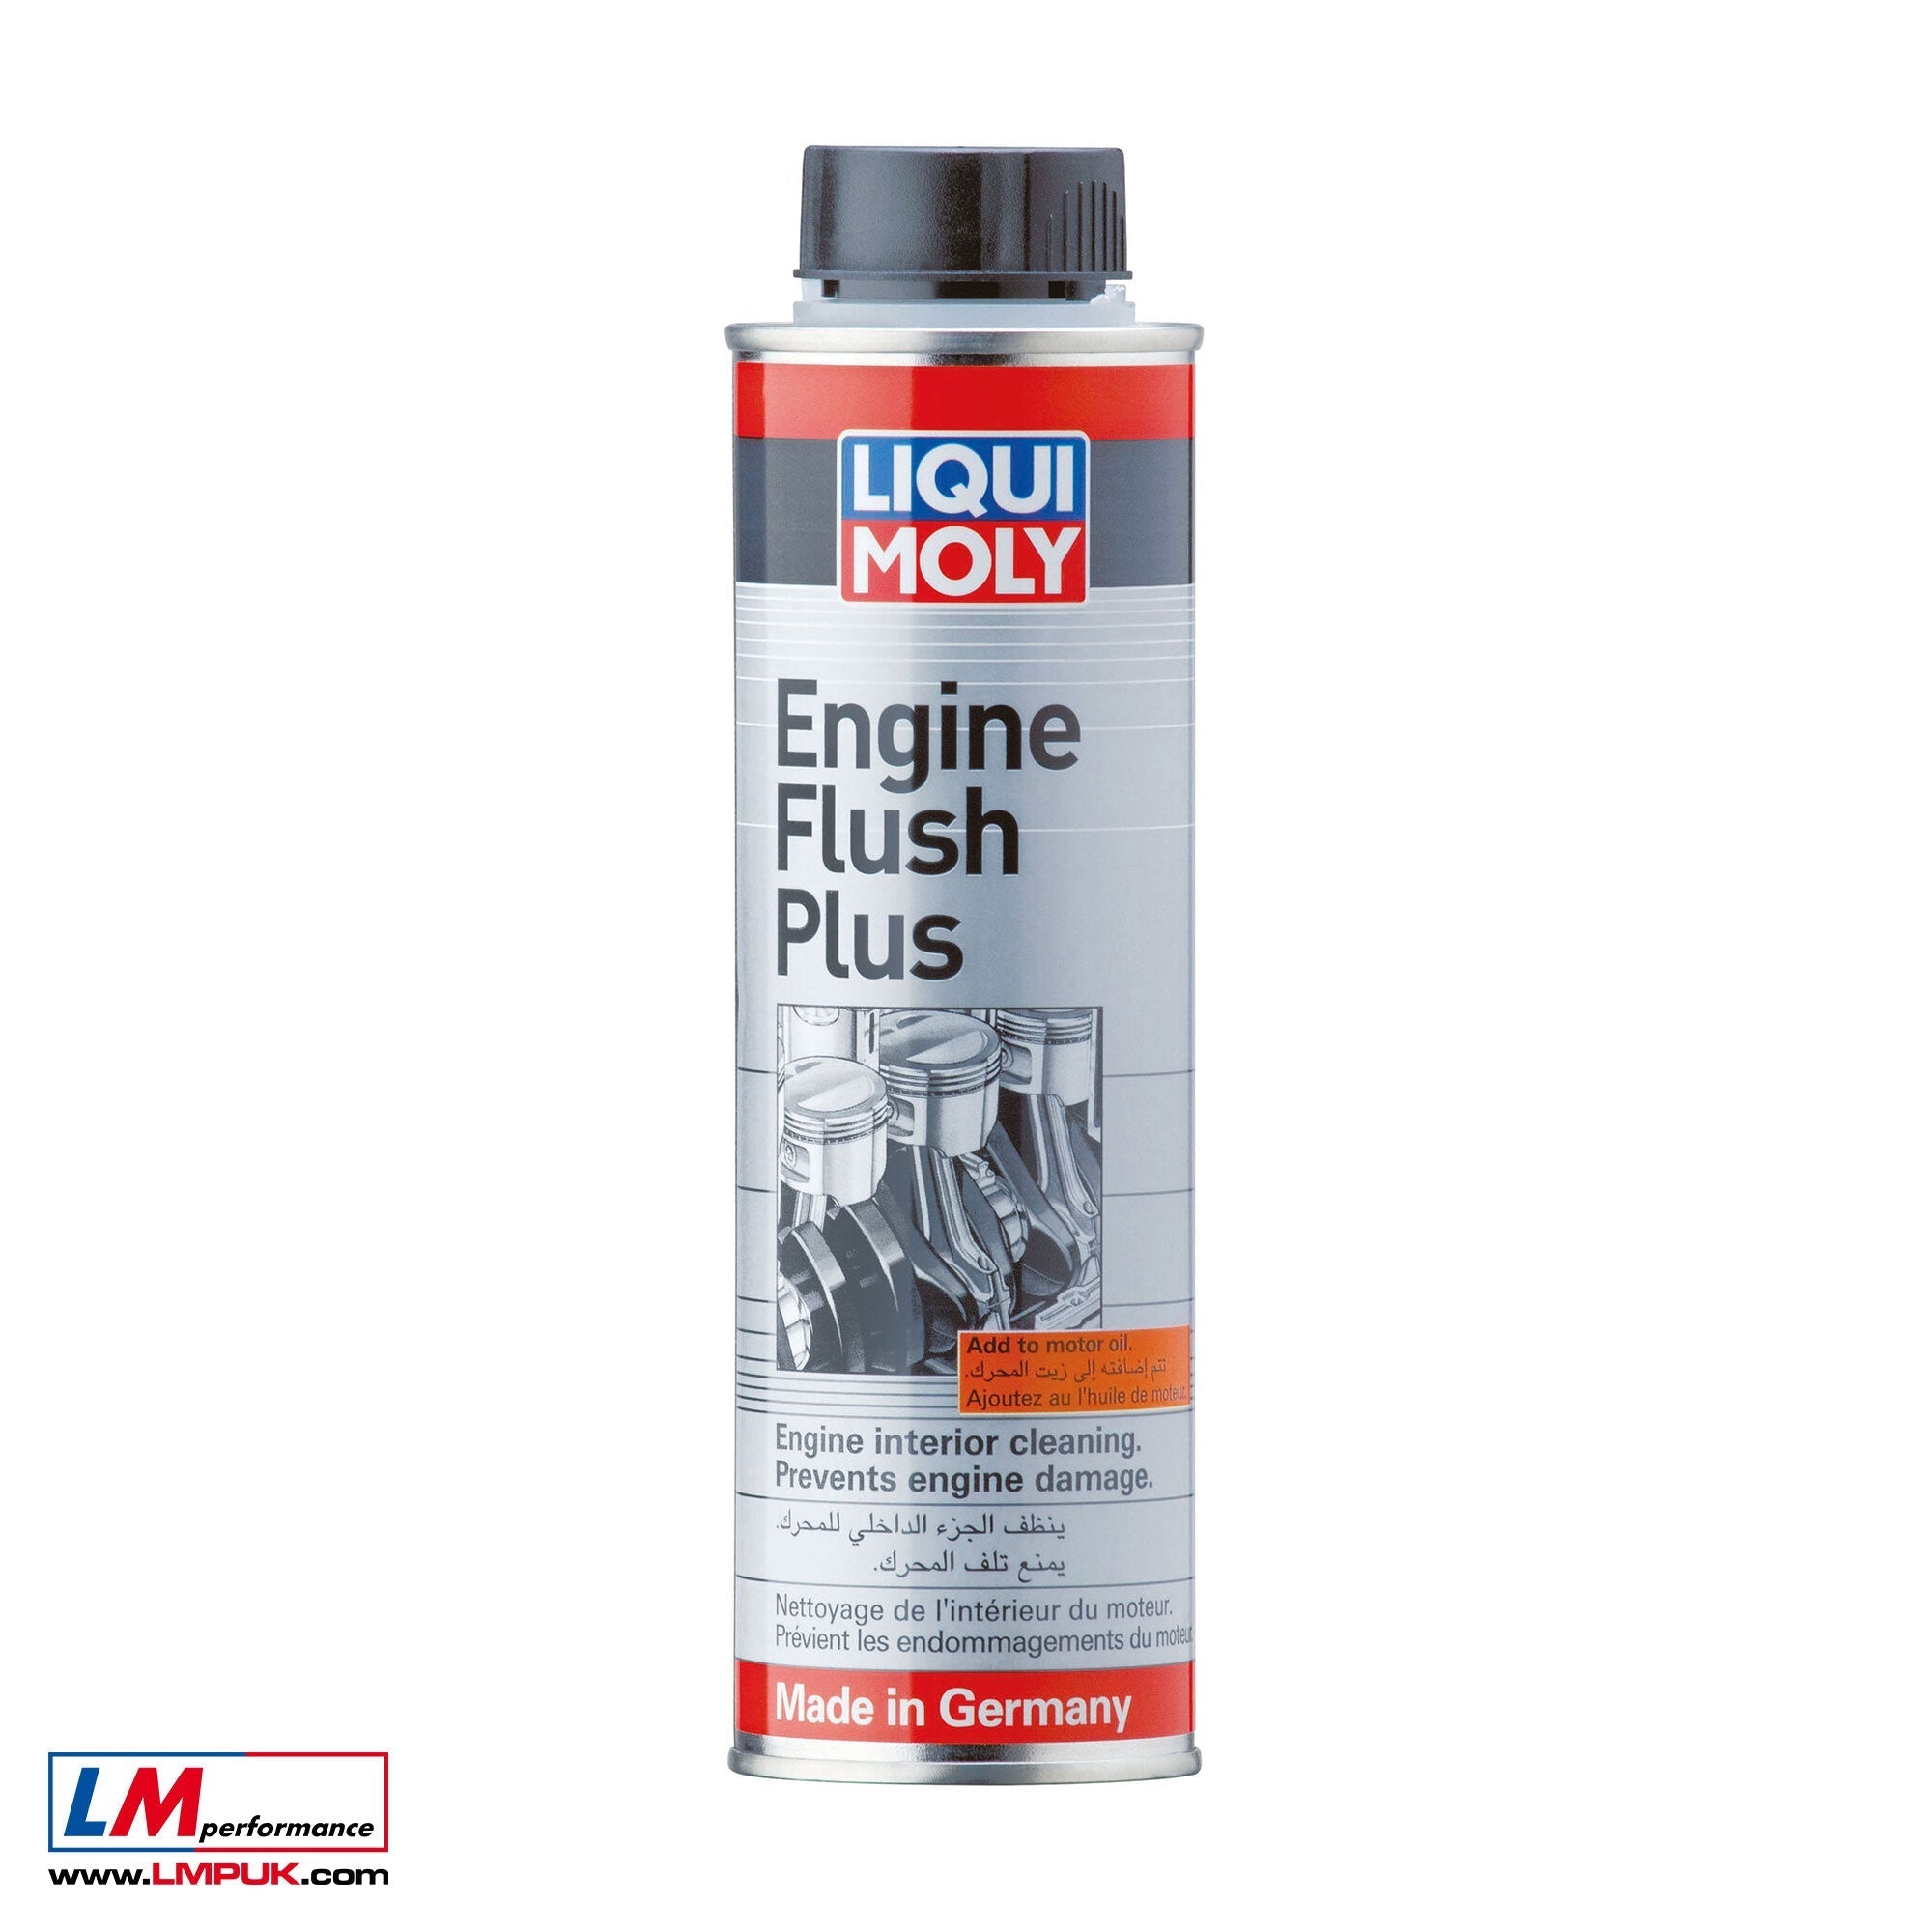 Engine Flush Plus by LIQUI MOLY – LM Performance